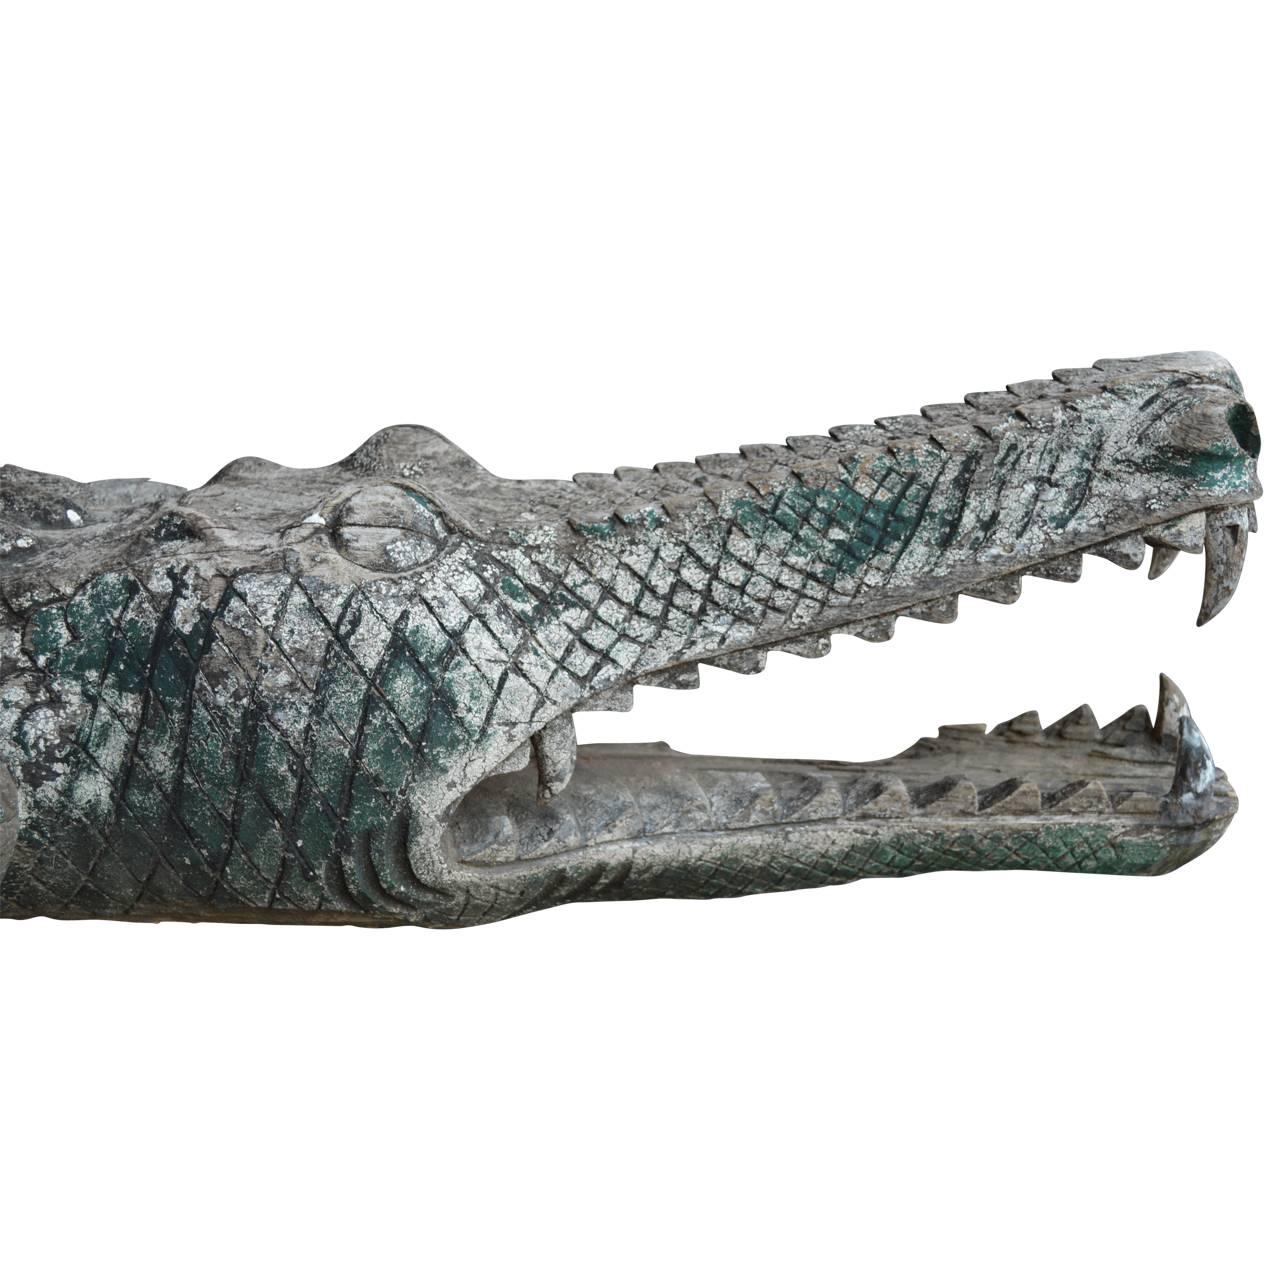 Carved Large 19th Century Folk Art Alligator